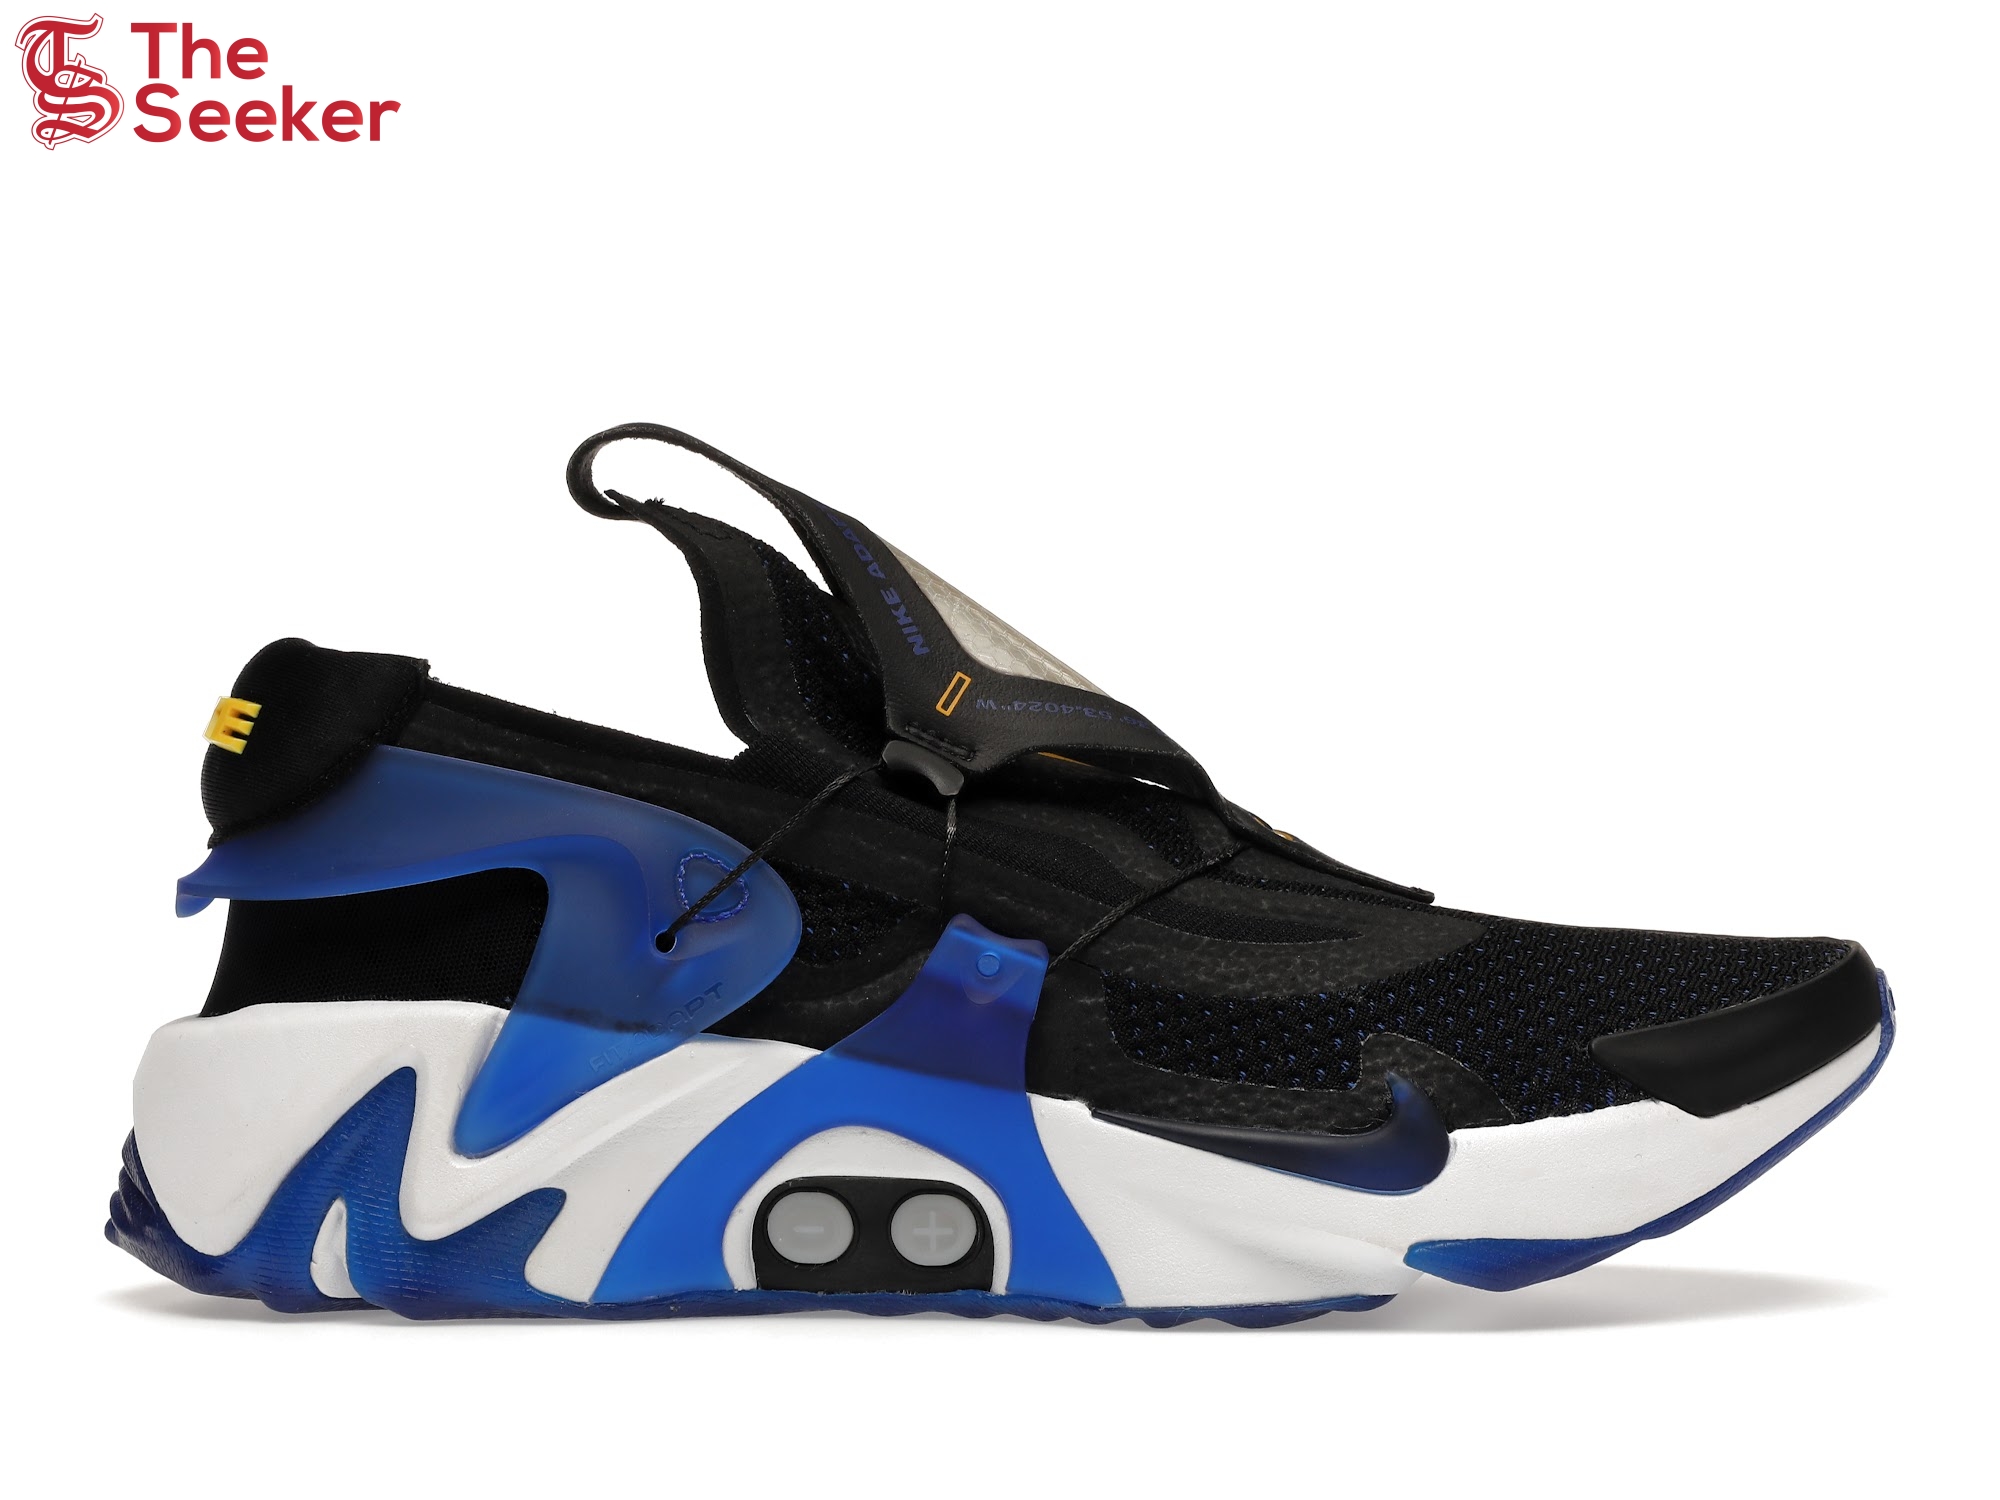 Nike Adapt Huarache Black Racer Blue (EU Charger)